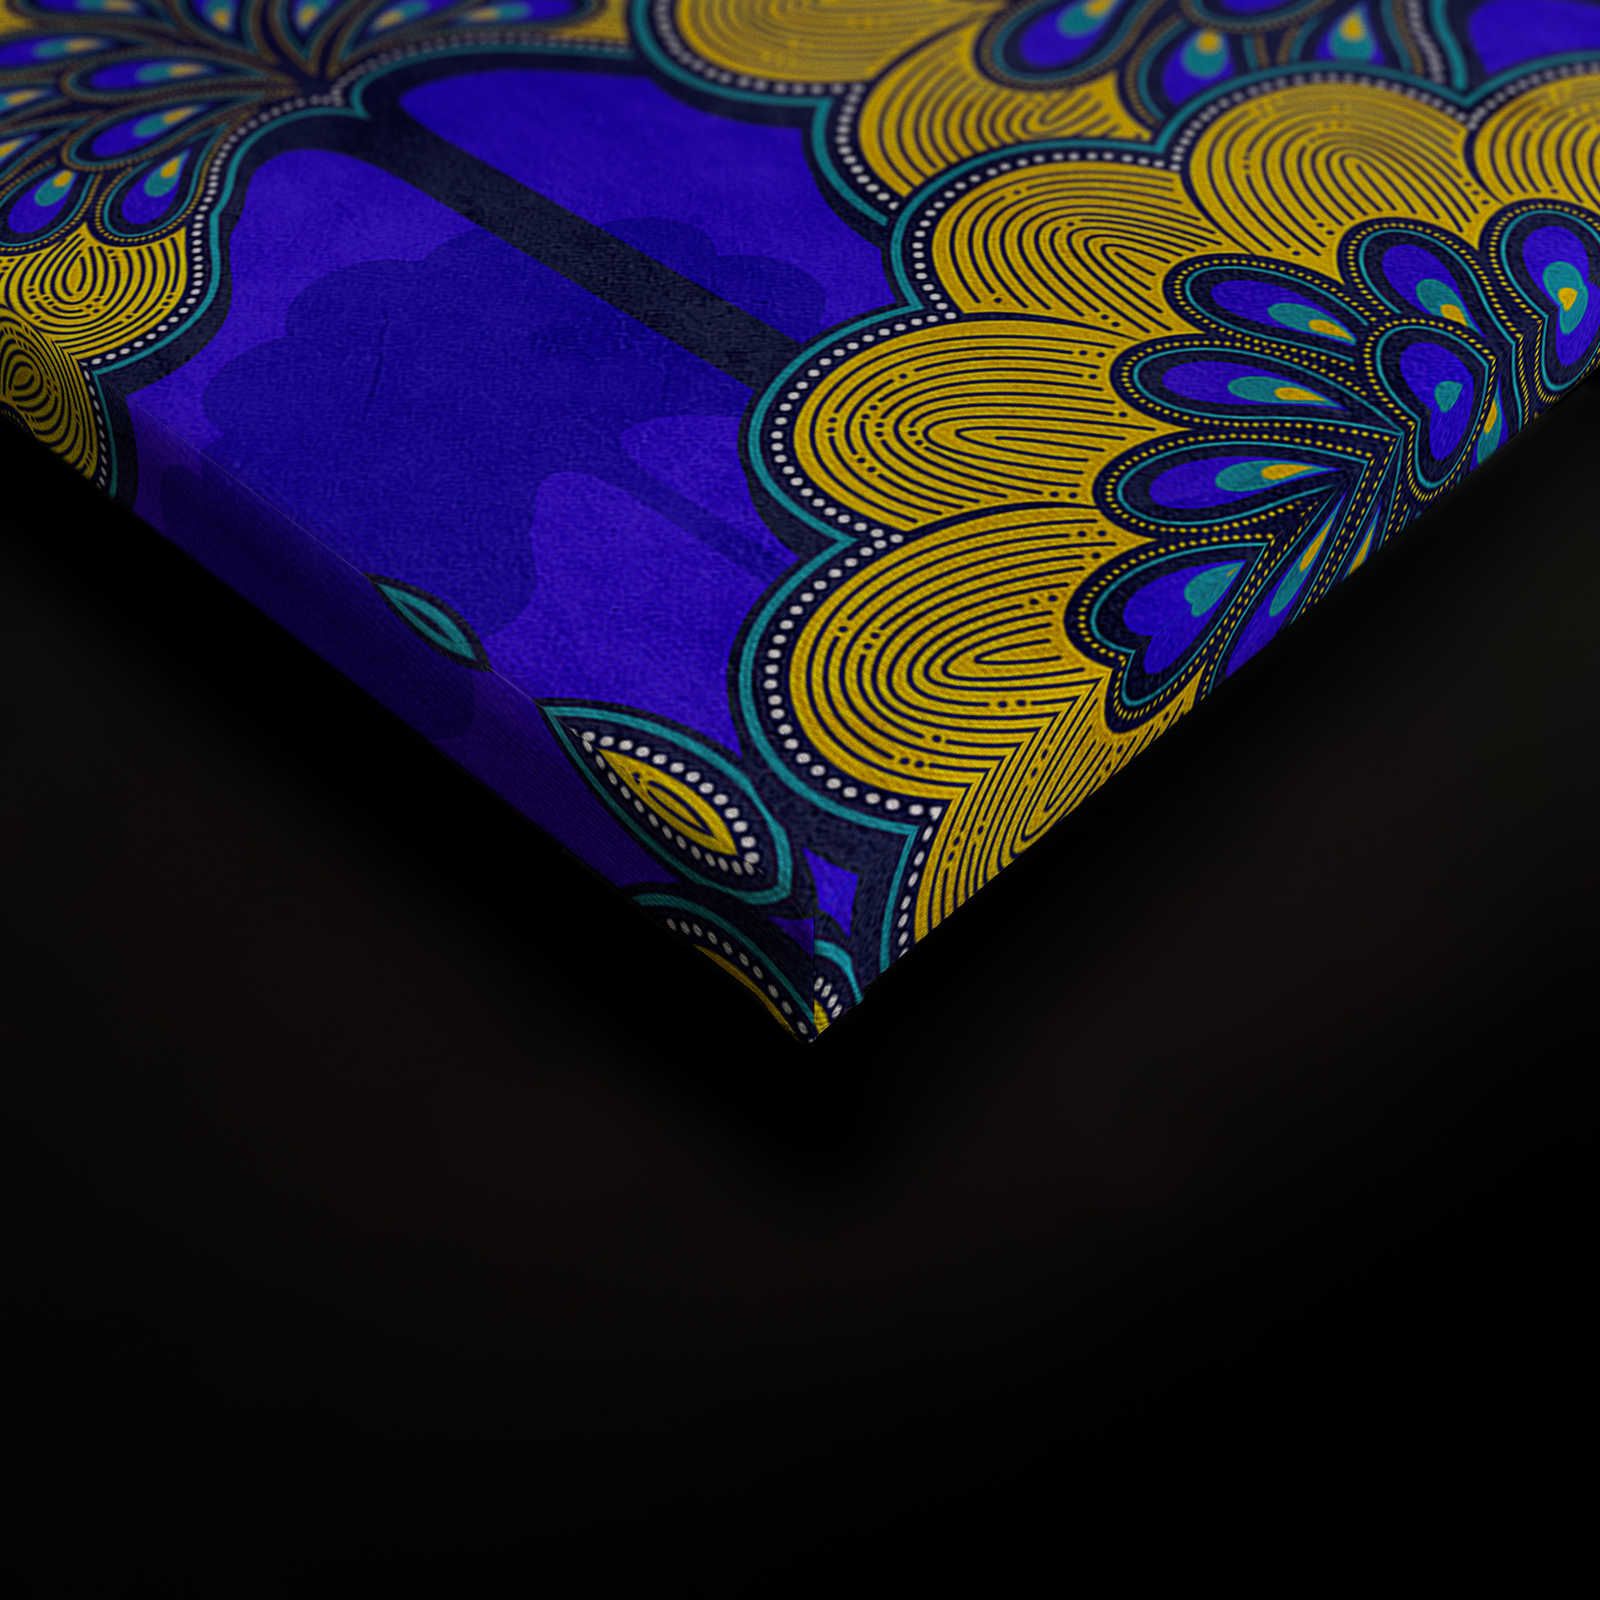             Dakar 1 - Leinwandbild Afrikanisches Stoff Muster Blau & Gelb – 0,90 m x 0,60 m
        